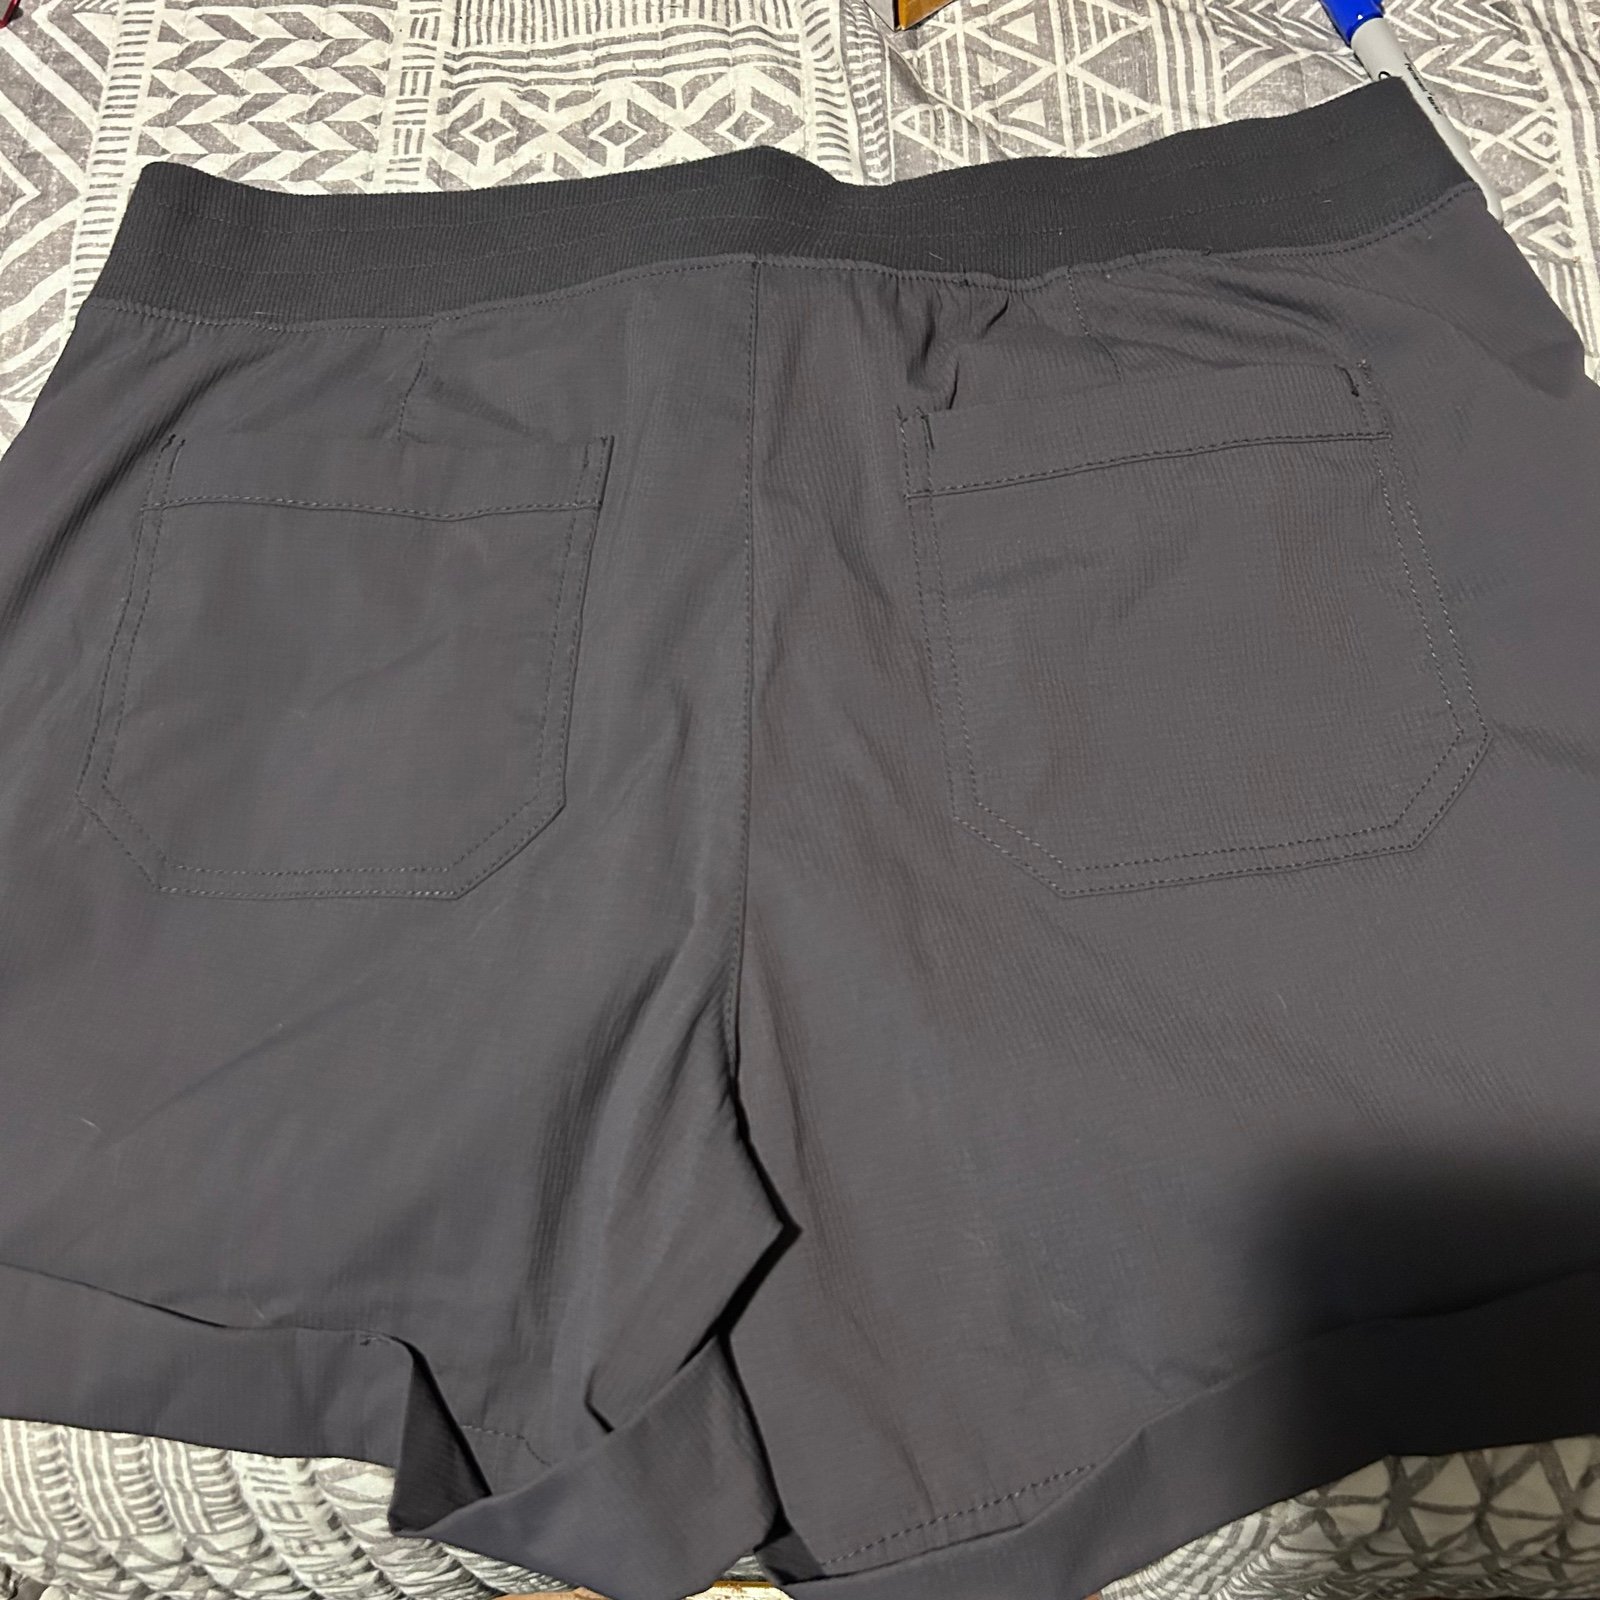 Popular Ladies Tangerine shorts XL OCU9gWtTJ Everyday Low Prices